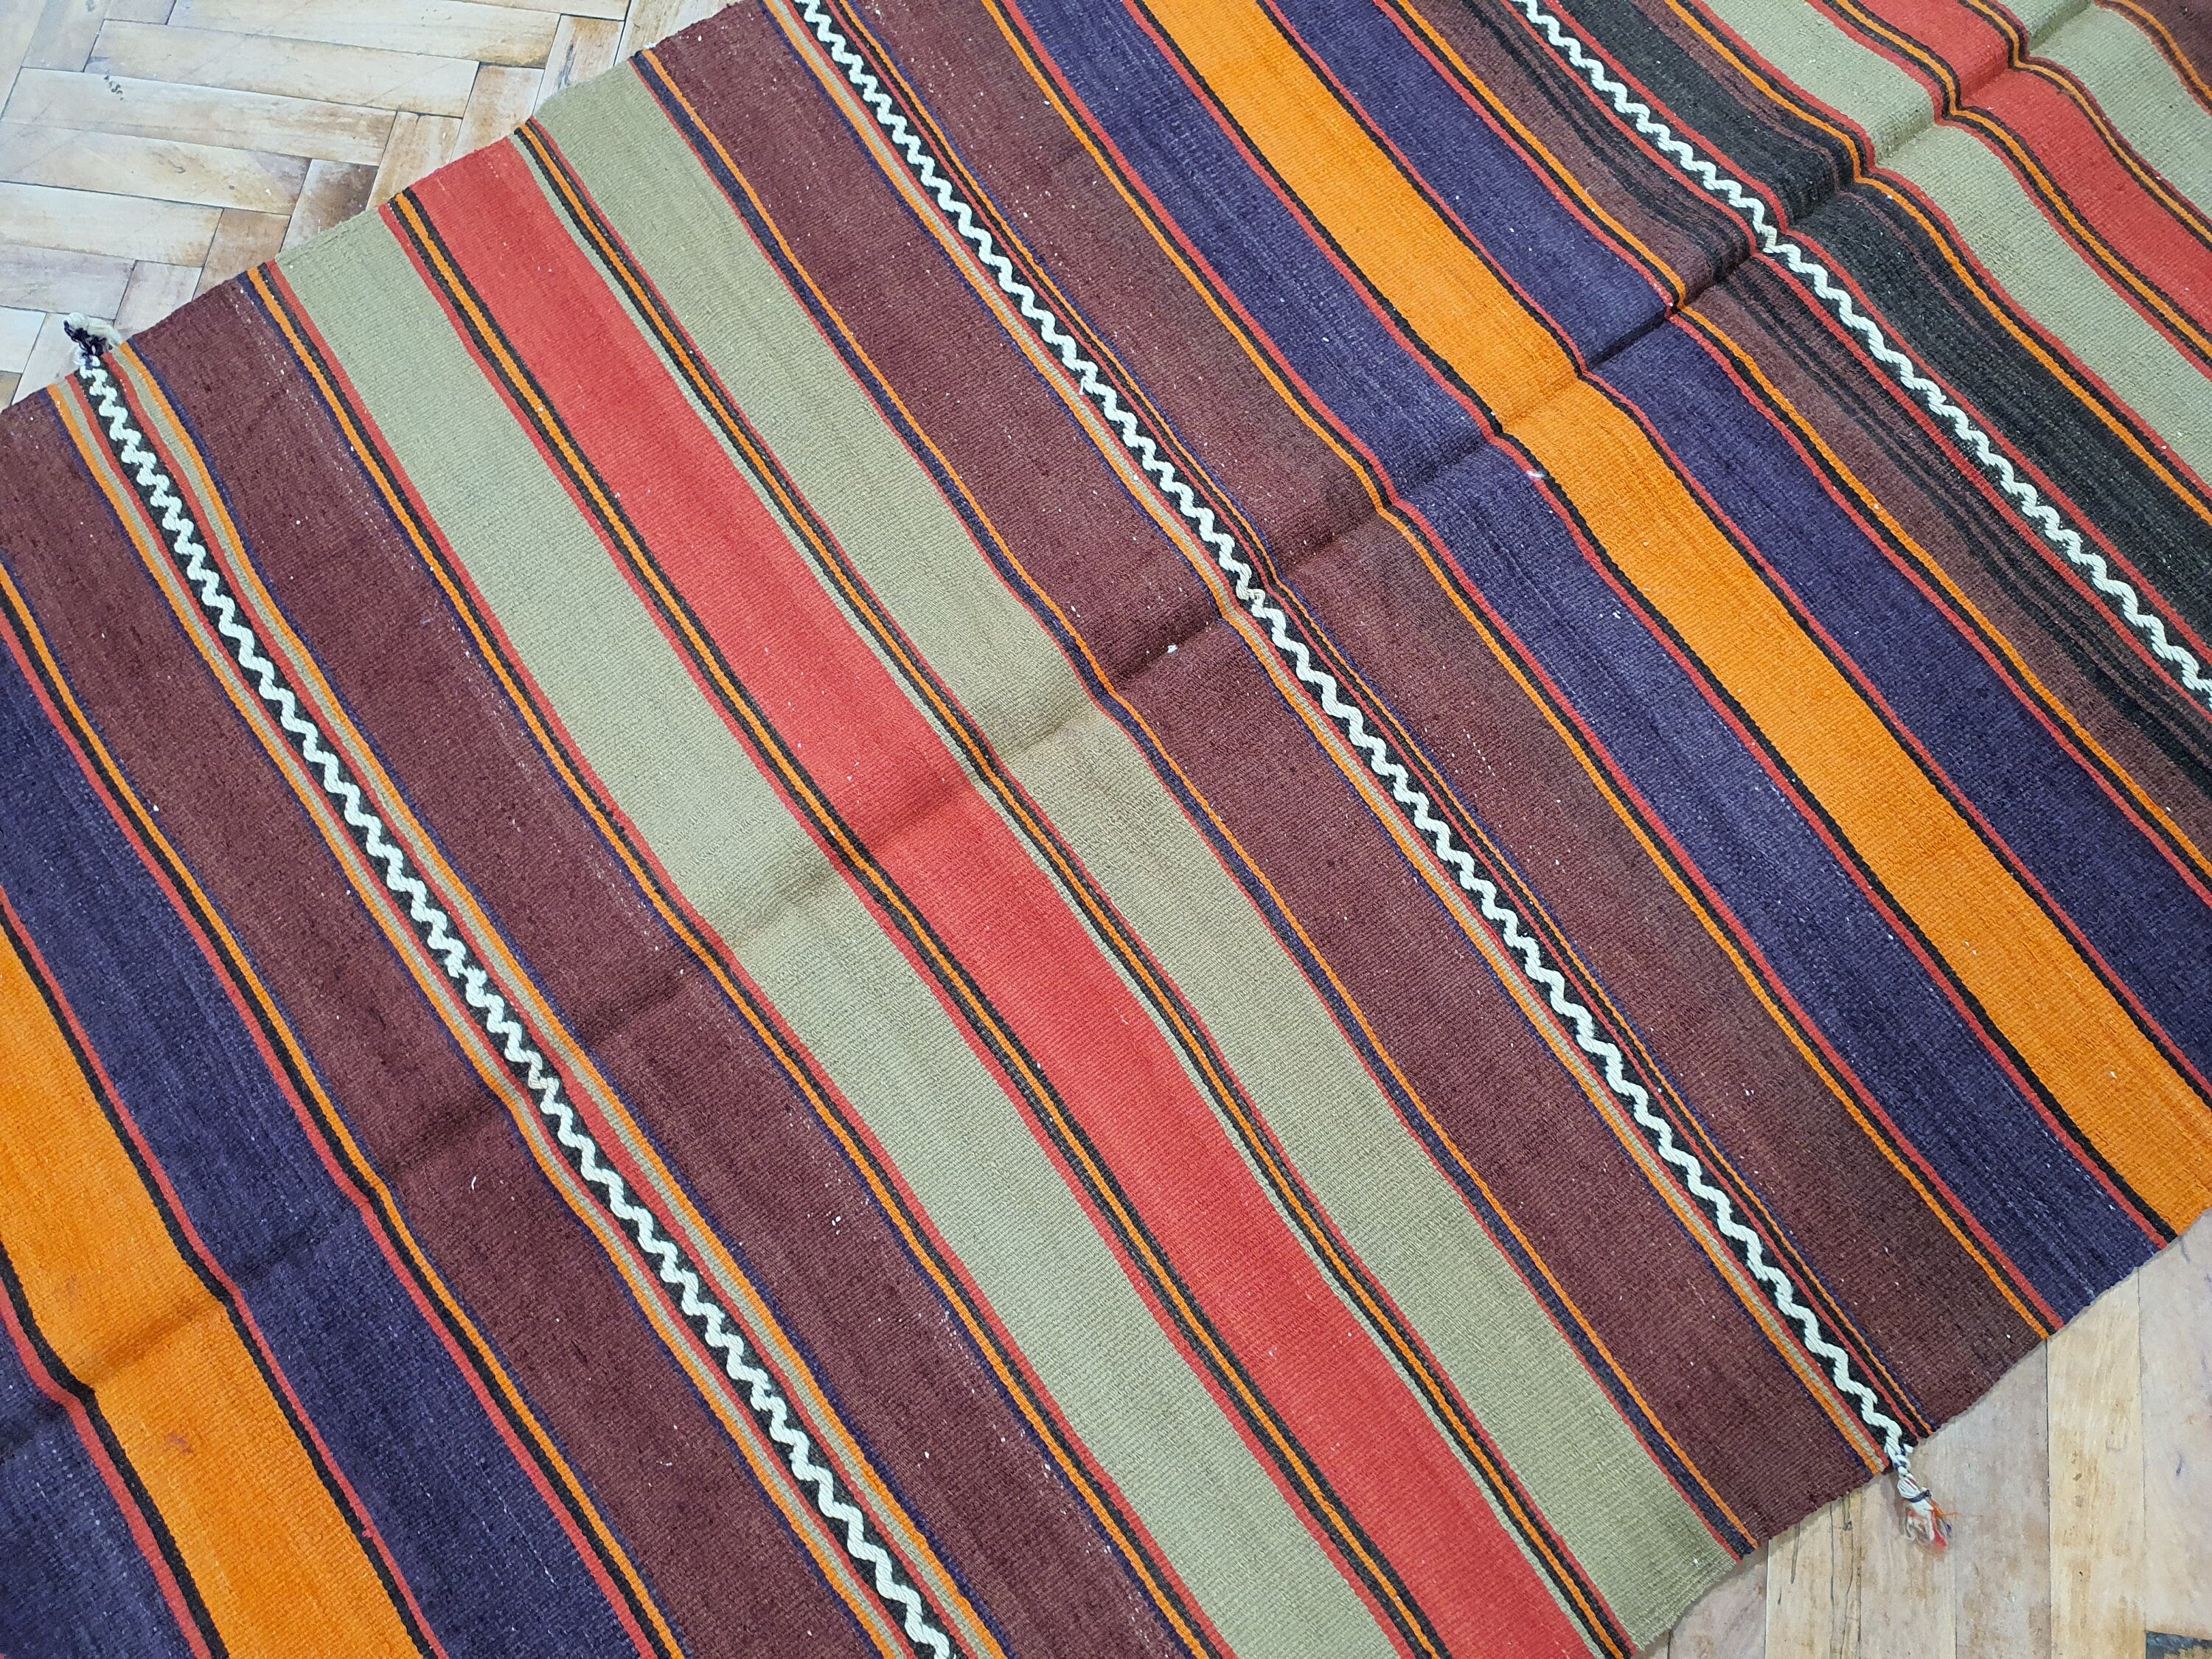 Turkish Kilim Rug, Handmade Organic Wool Rug, Anatolian Tribal Nomadic Moroccan Bohemian Living Room Rustic Decor Persian Area Rug 7'3"x4'4'